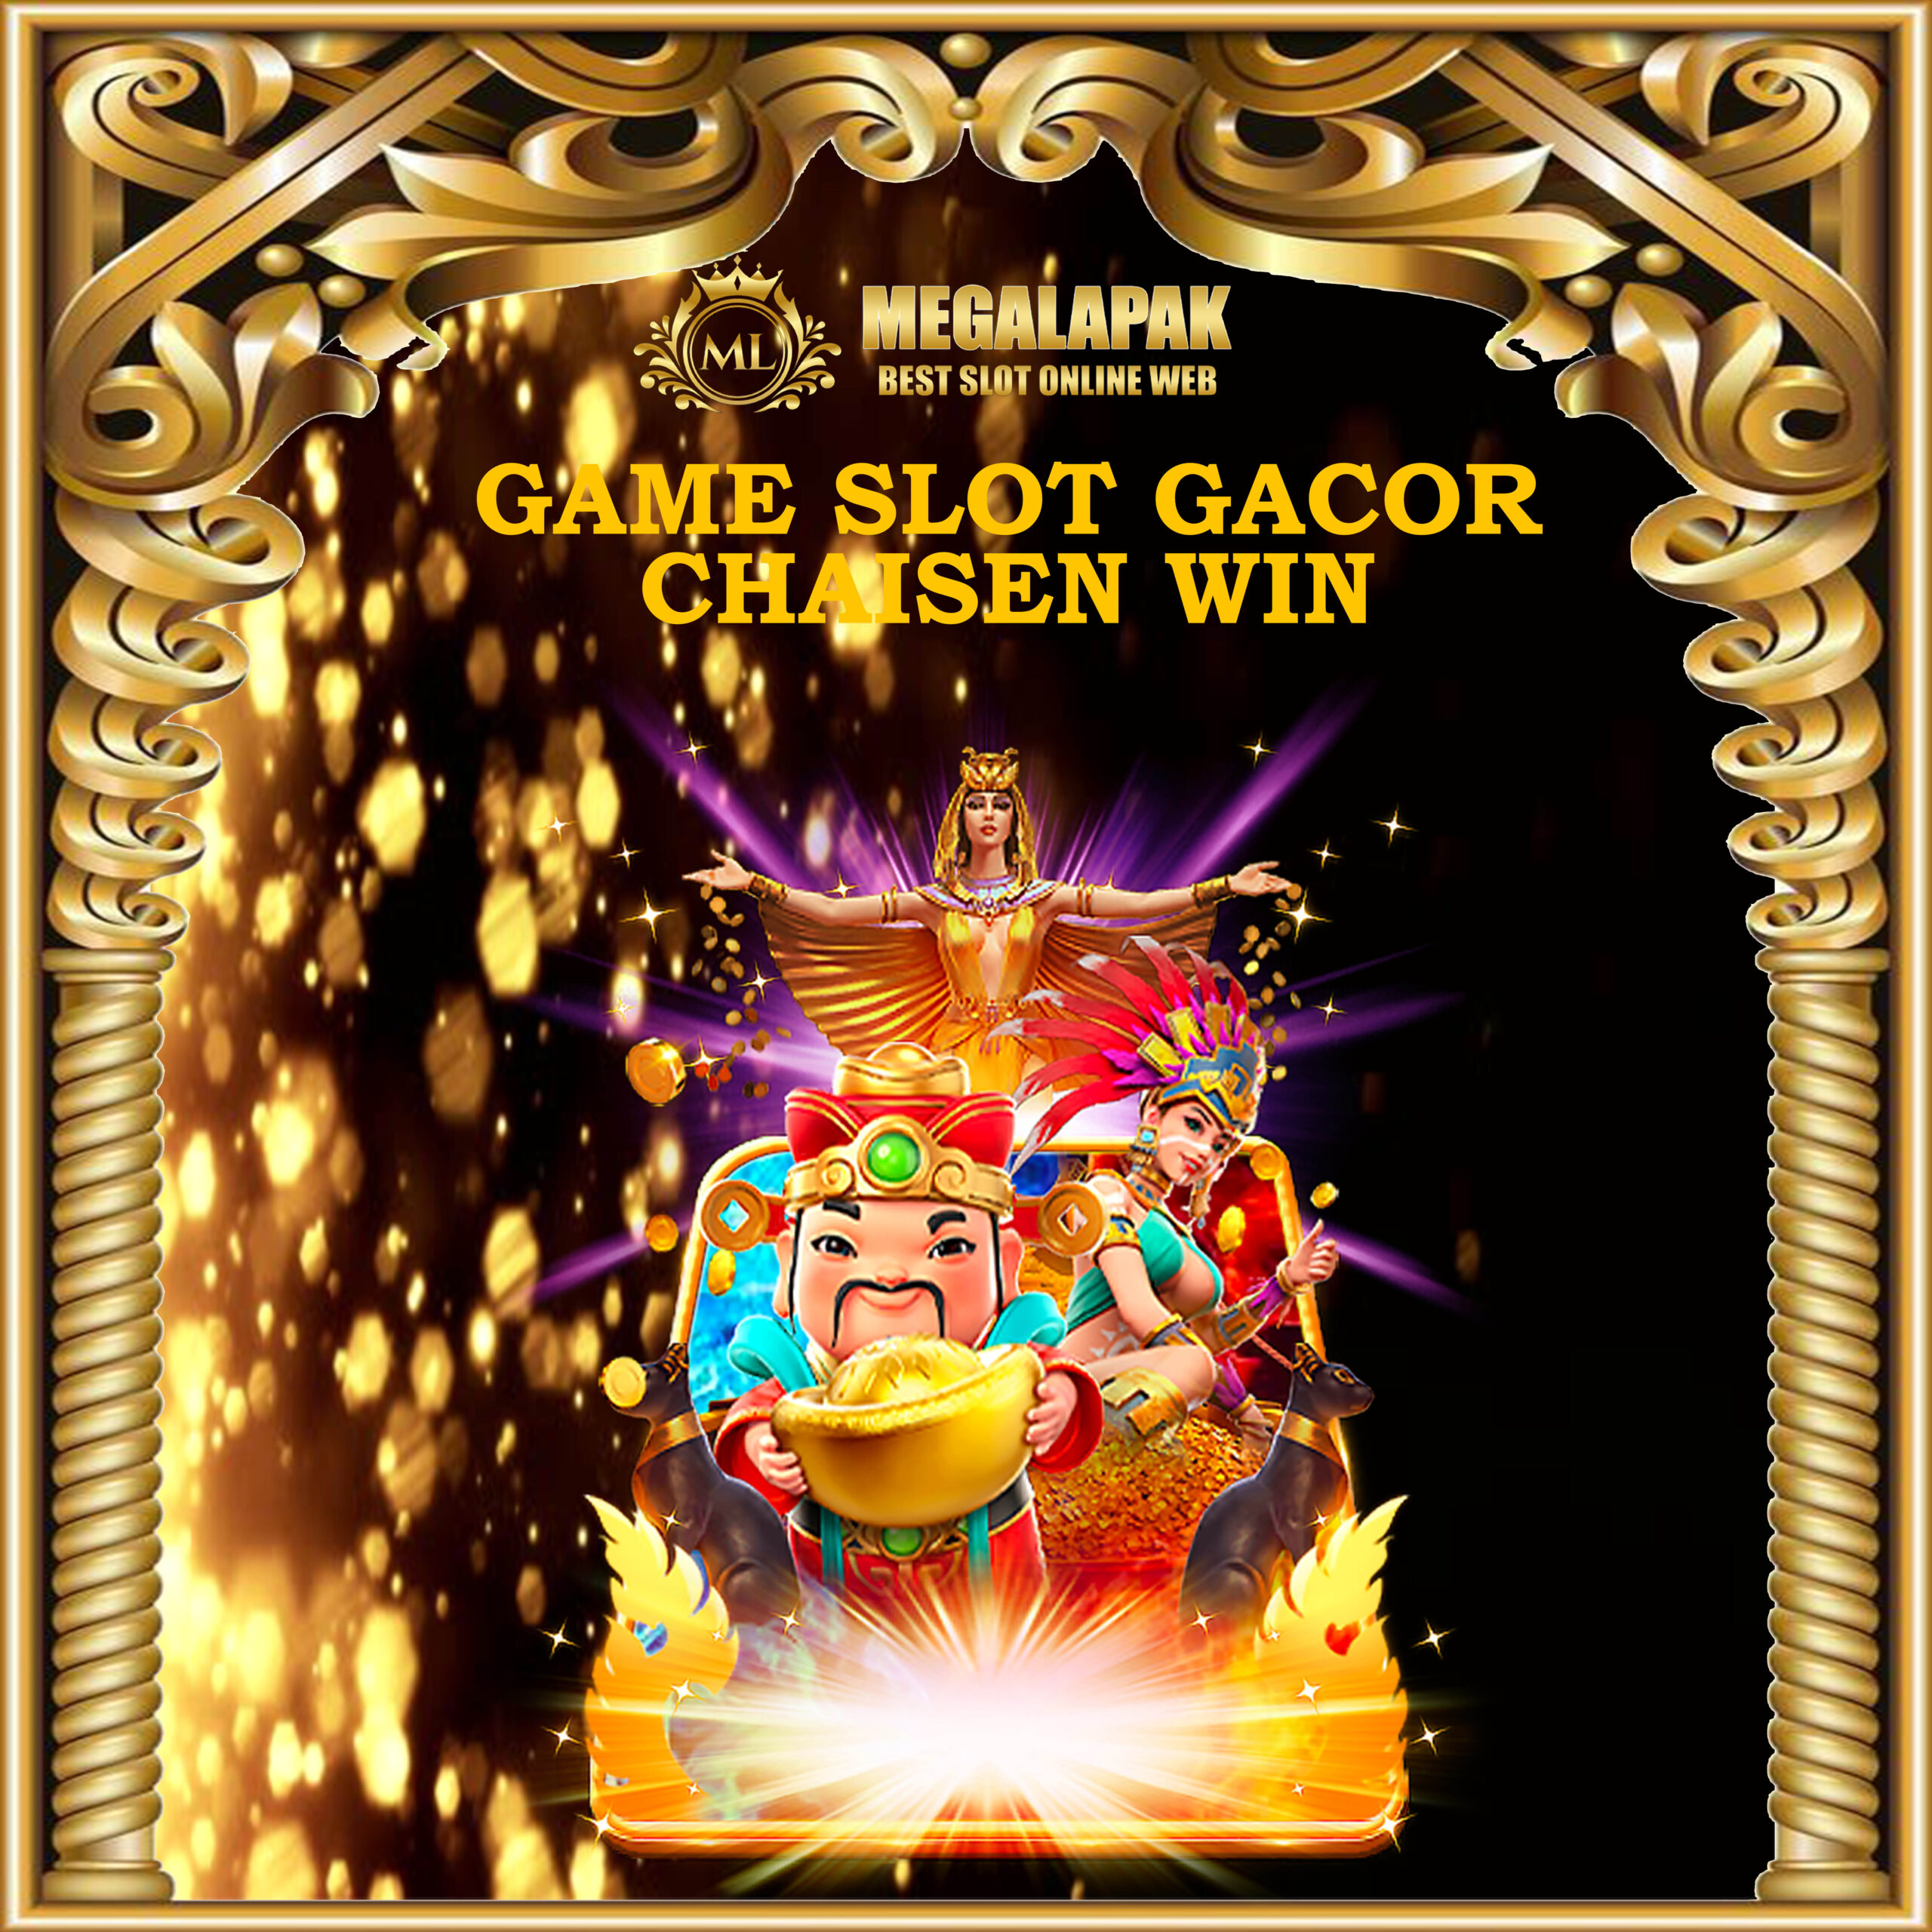 Slot Gacor Chaisen Win